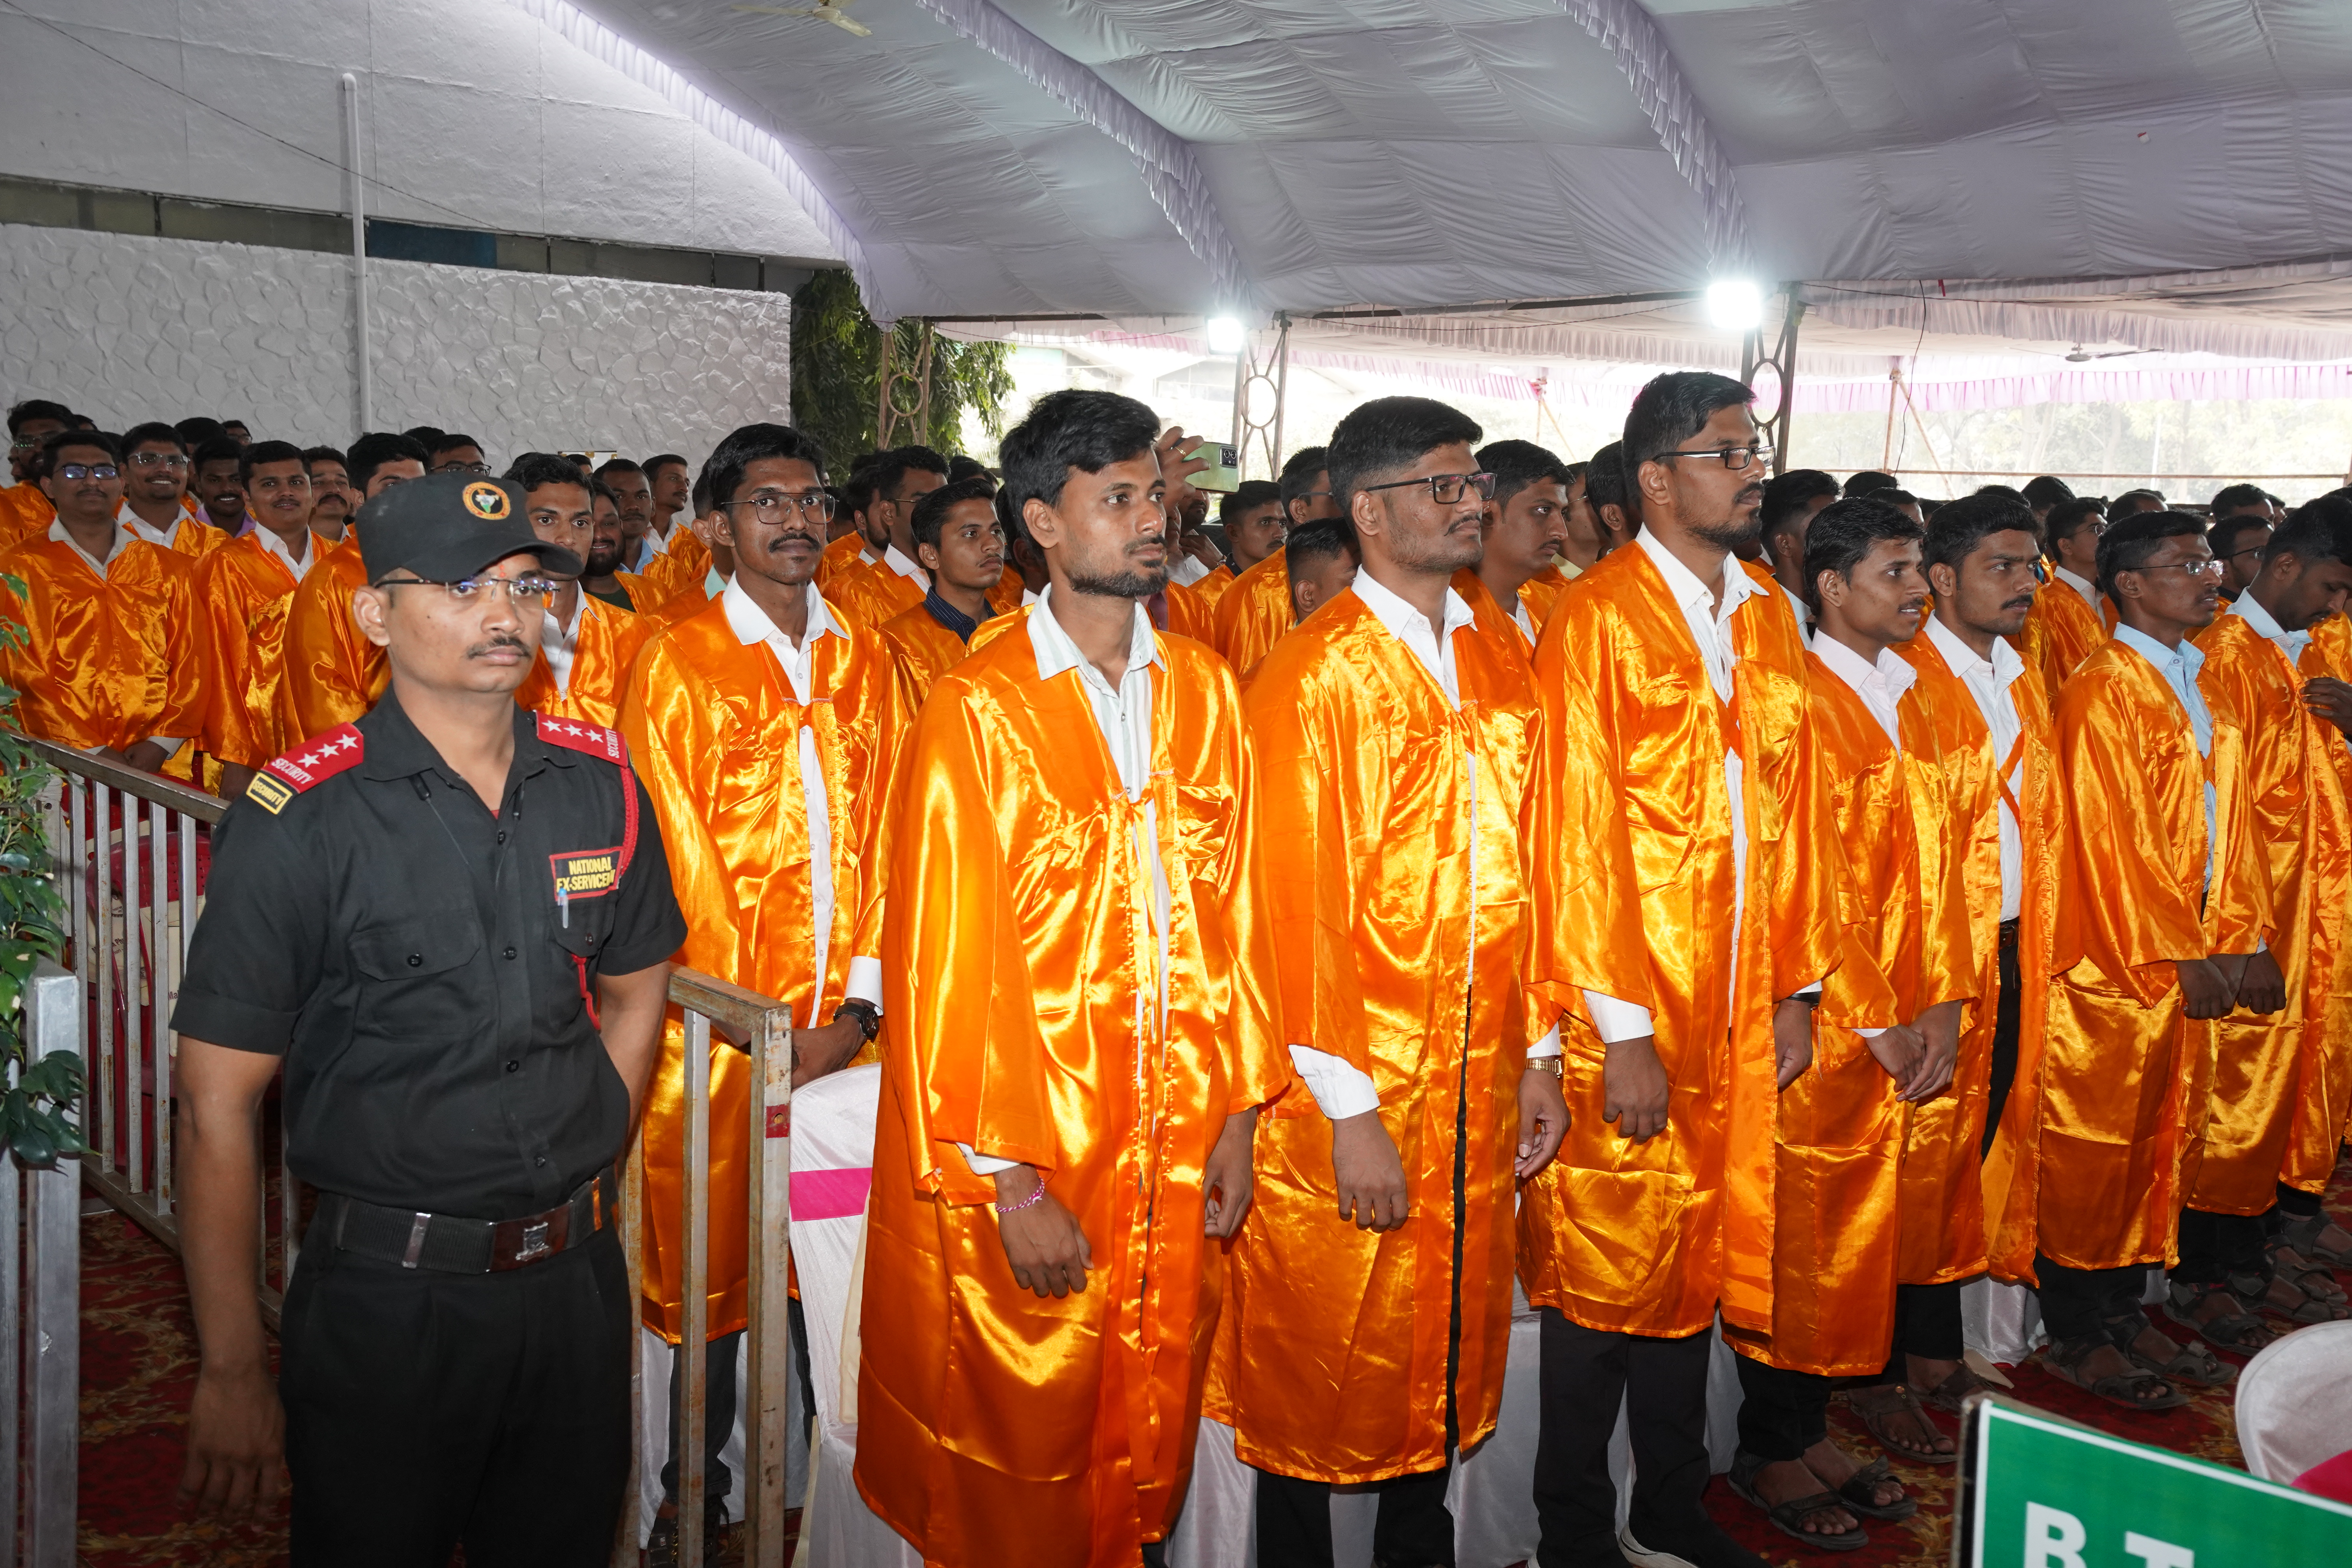 36th Convocation of MPKV, Rahuri-6-1-2023